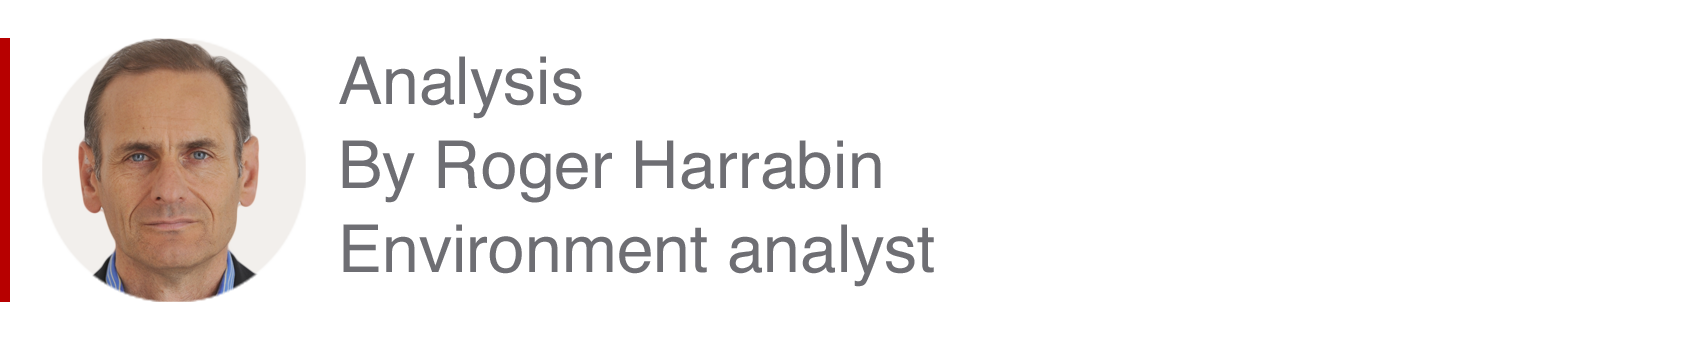 Analysis box by Roger Harrabin, environmental analyst